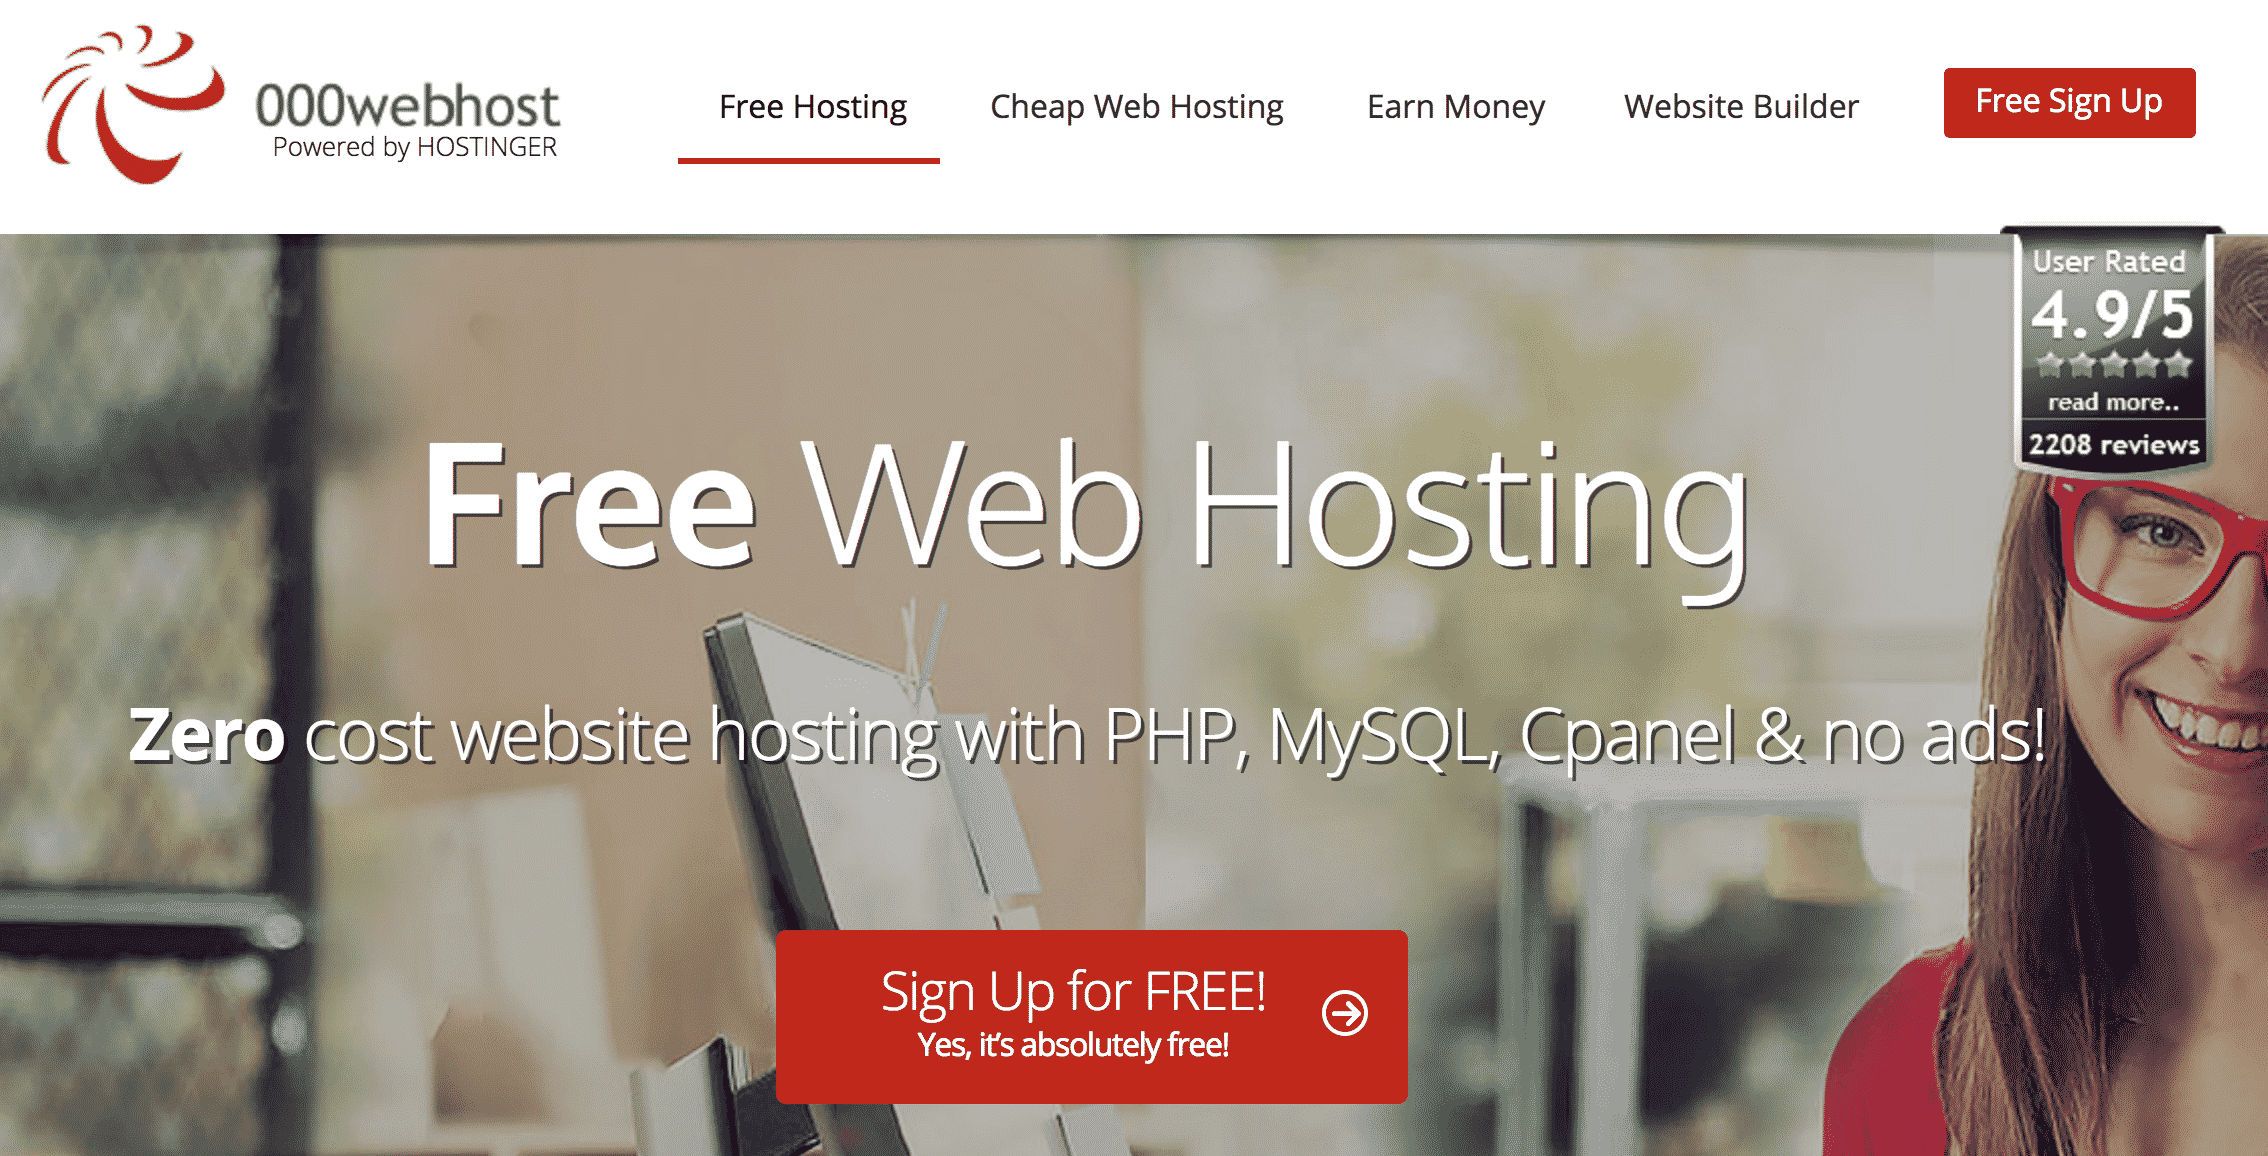 000WebHost Free WordPress Hosting